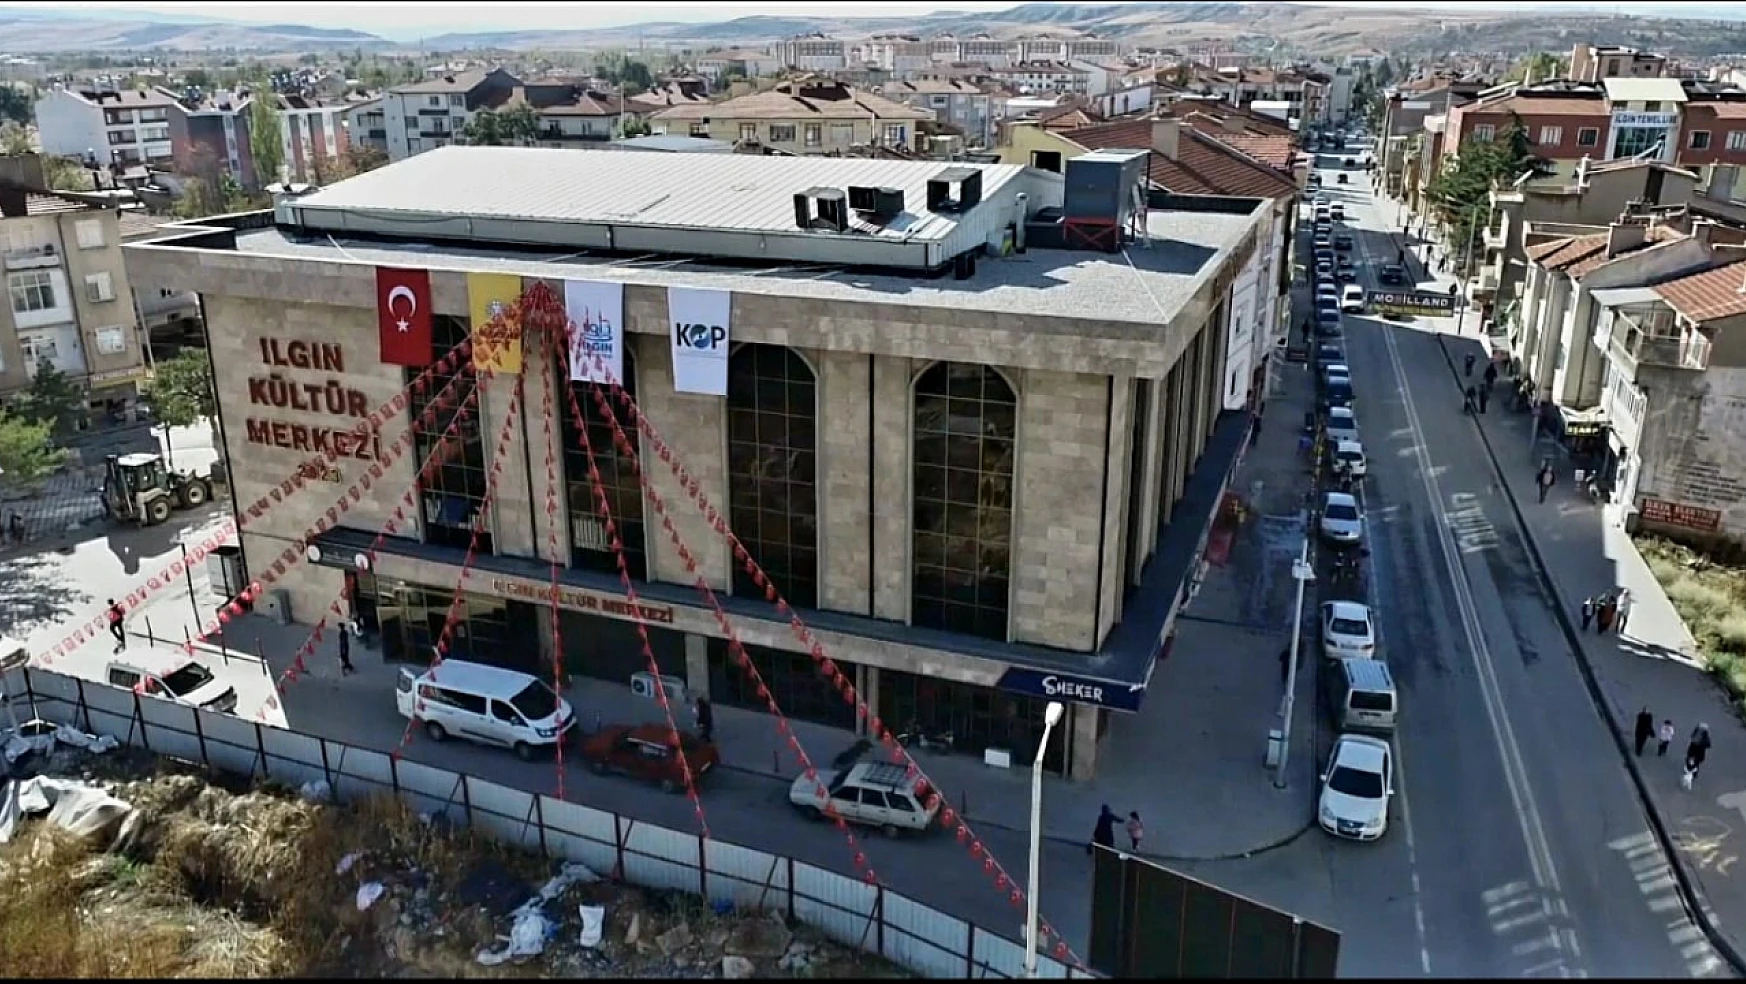 Konya'daki Bu İlçe Kültür Merkezi'ne Kavuştu